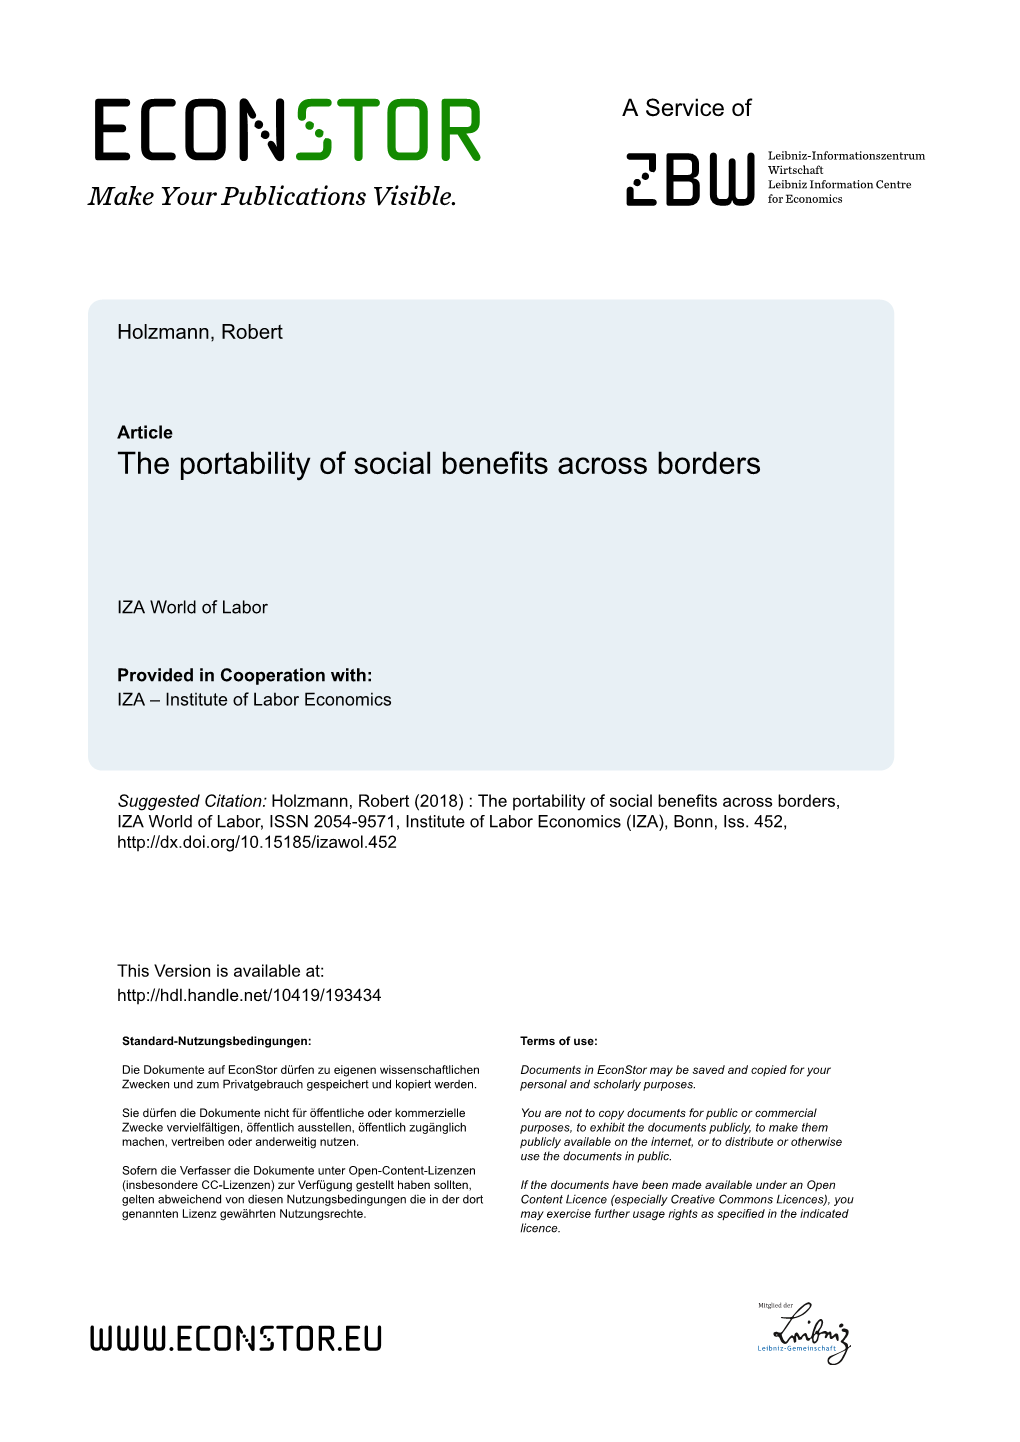 The Portability of Social Benefits Across Borders